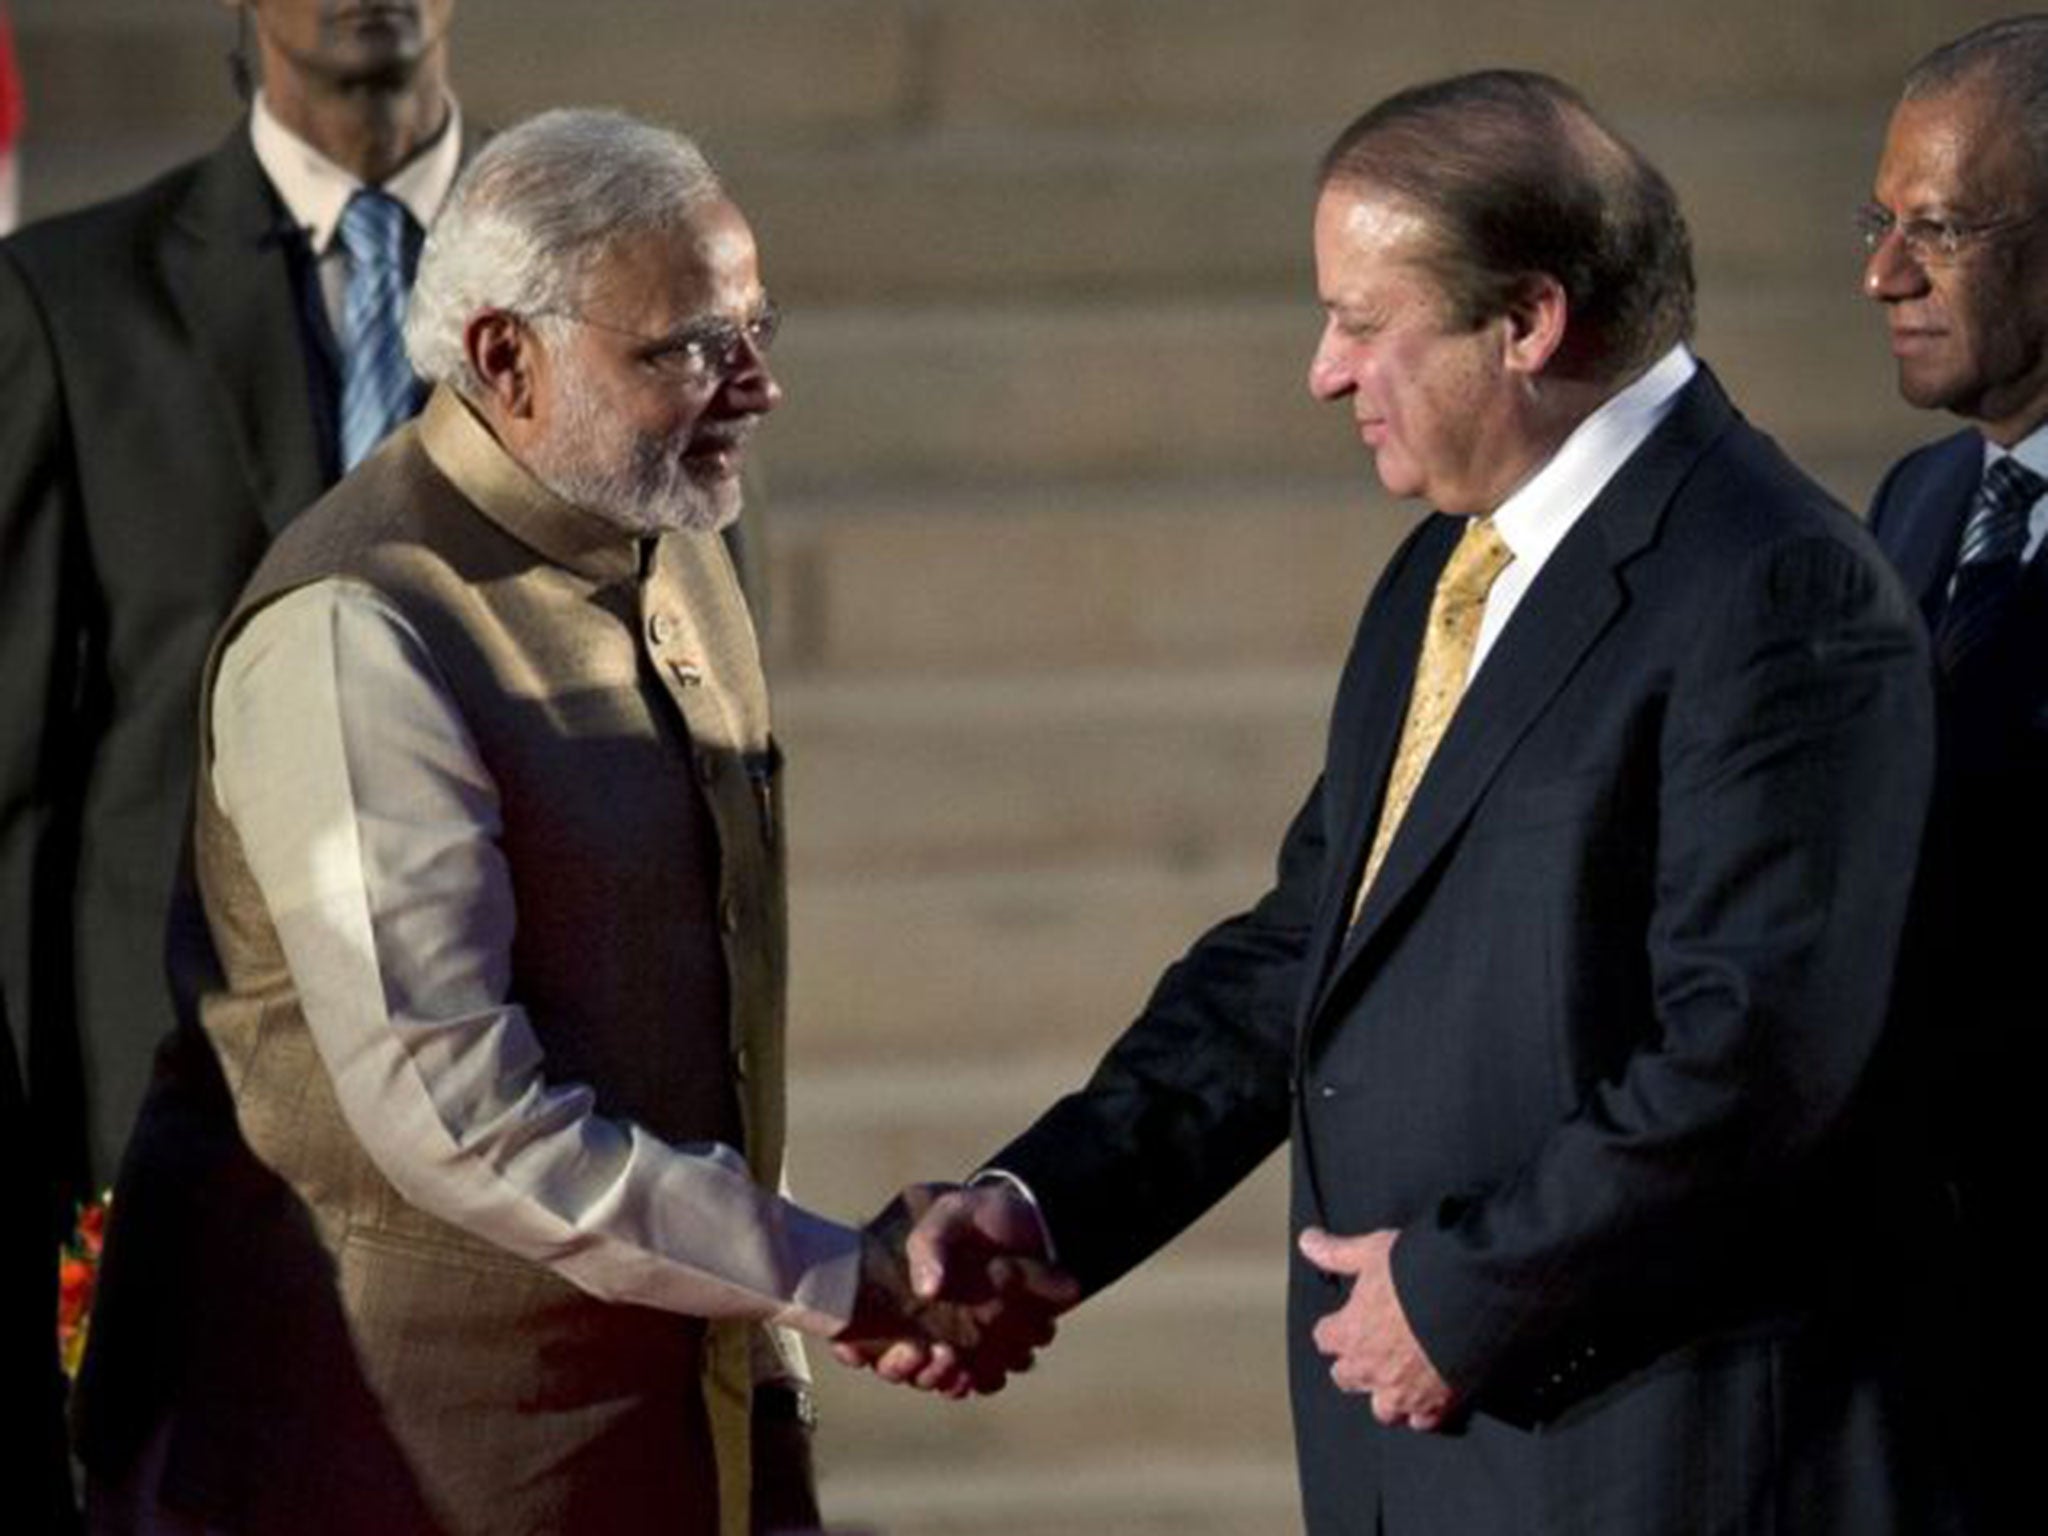 Indian Prime Minister Narendra Modi and his Pakistani counterpart Nawaz Sharif shake hands at Modi's inauguration